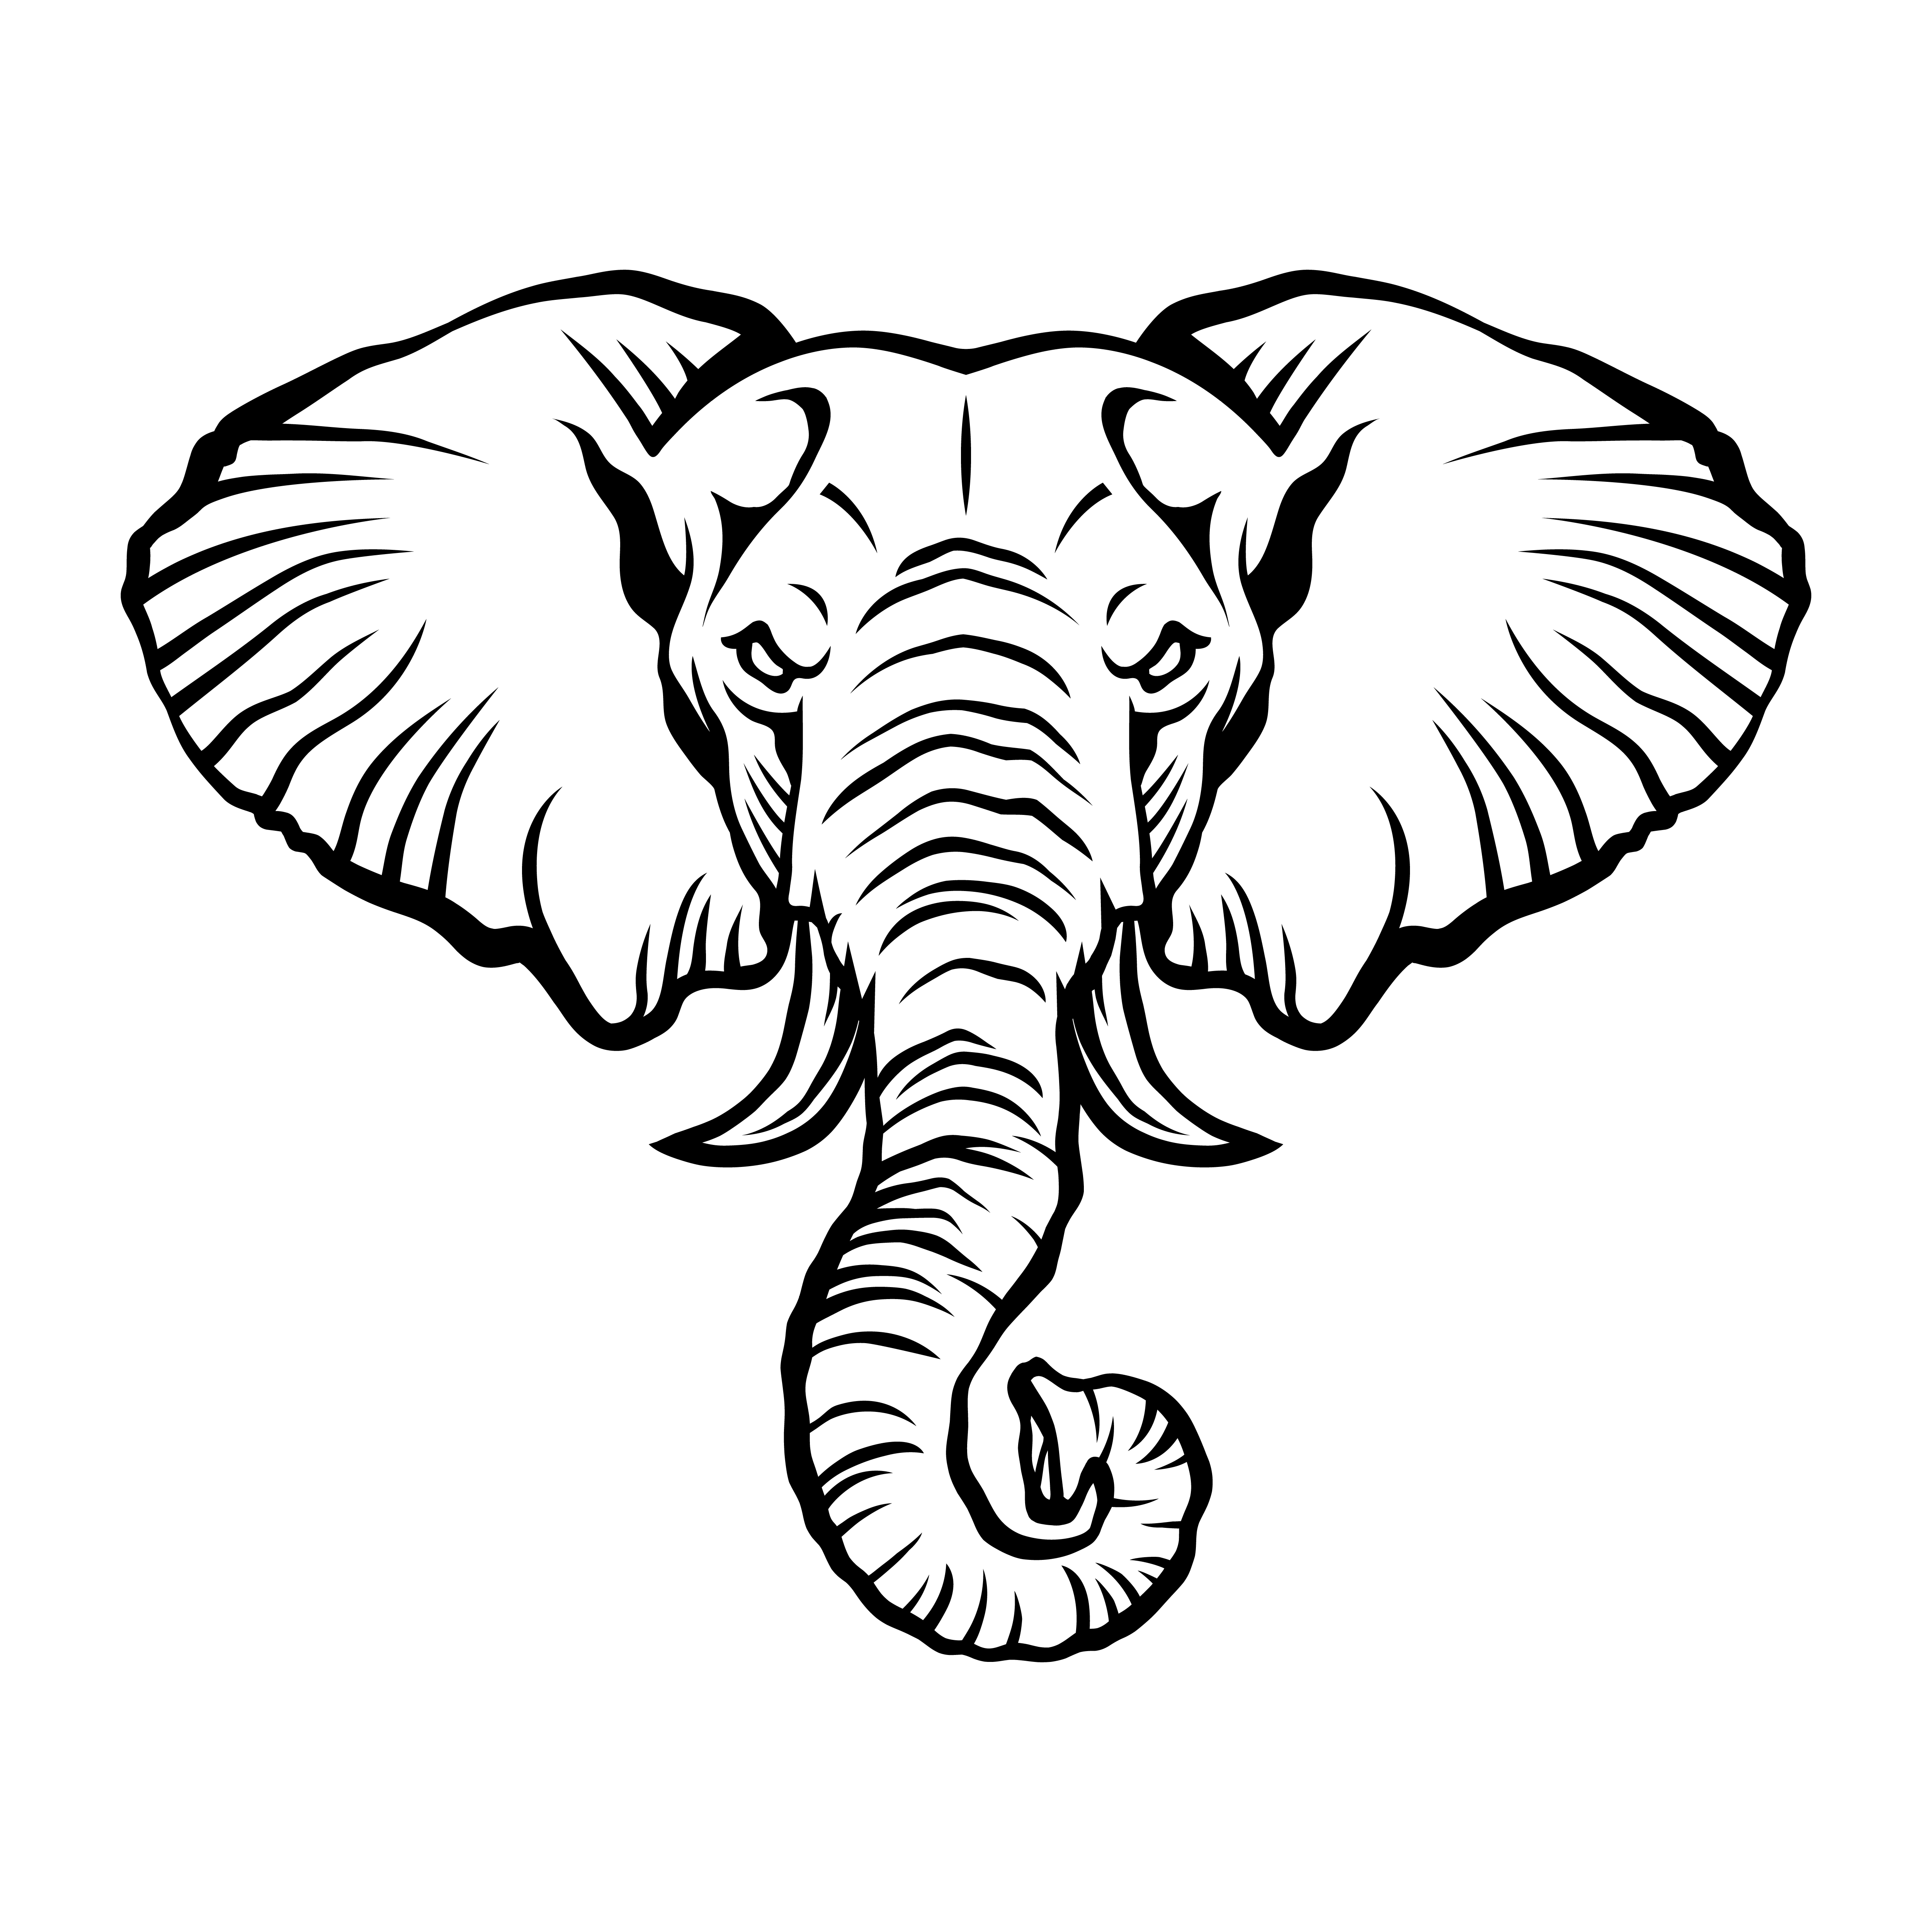 Download Angry cartoon elephant illustration 546830 - Download Free Vectors, Clipart Graphics & Vector Art